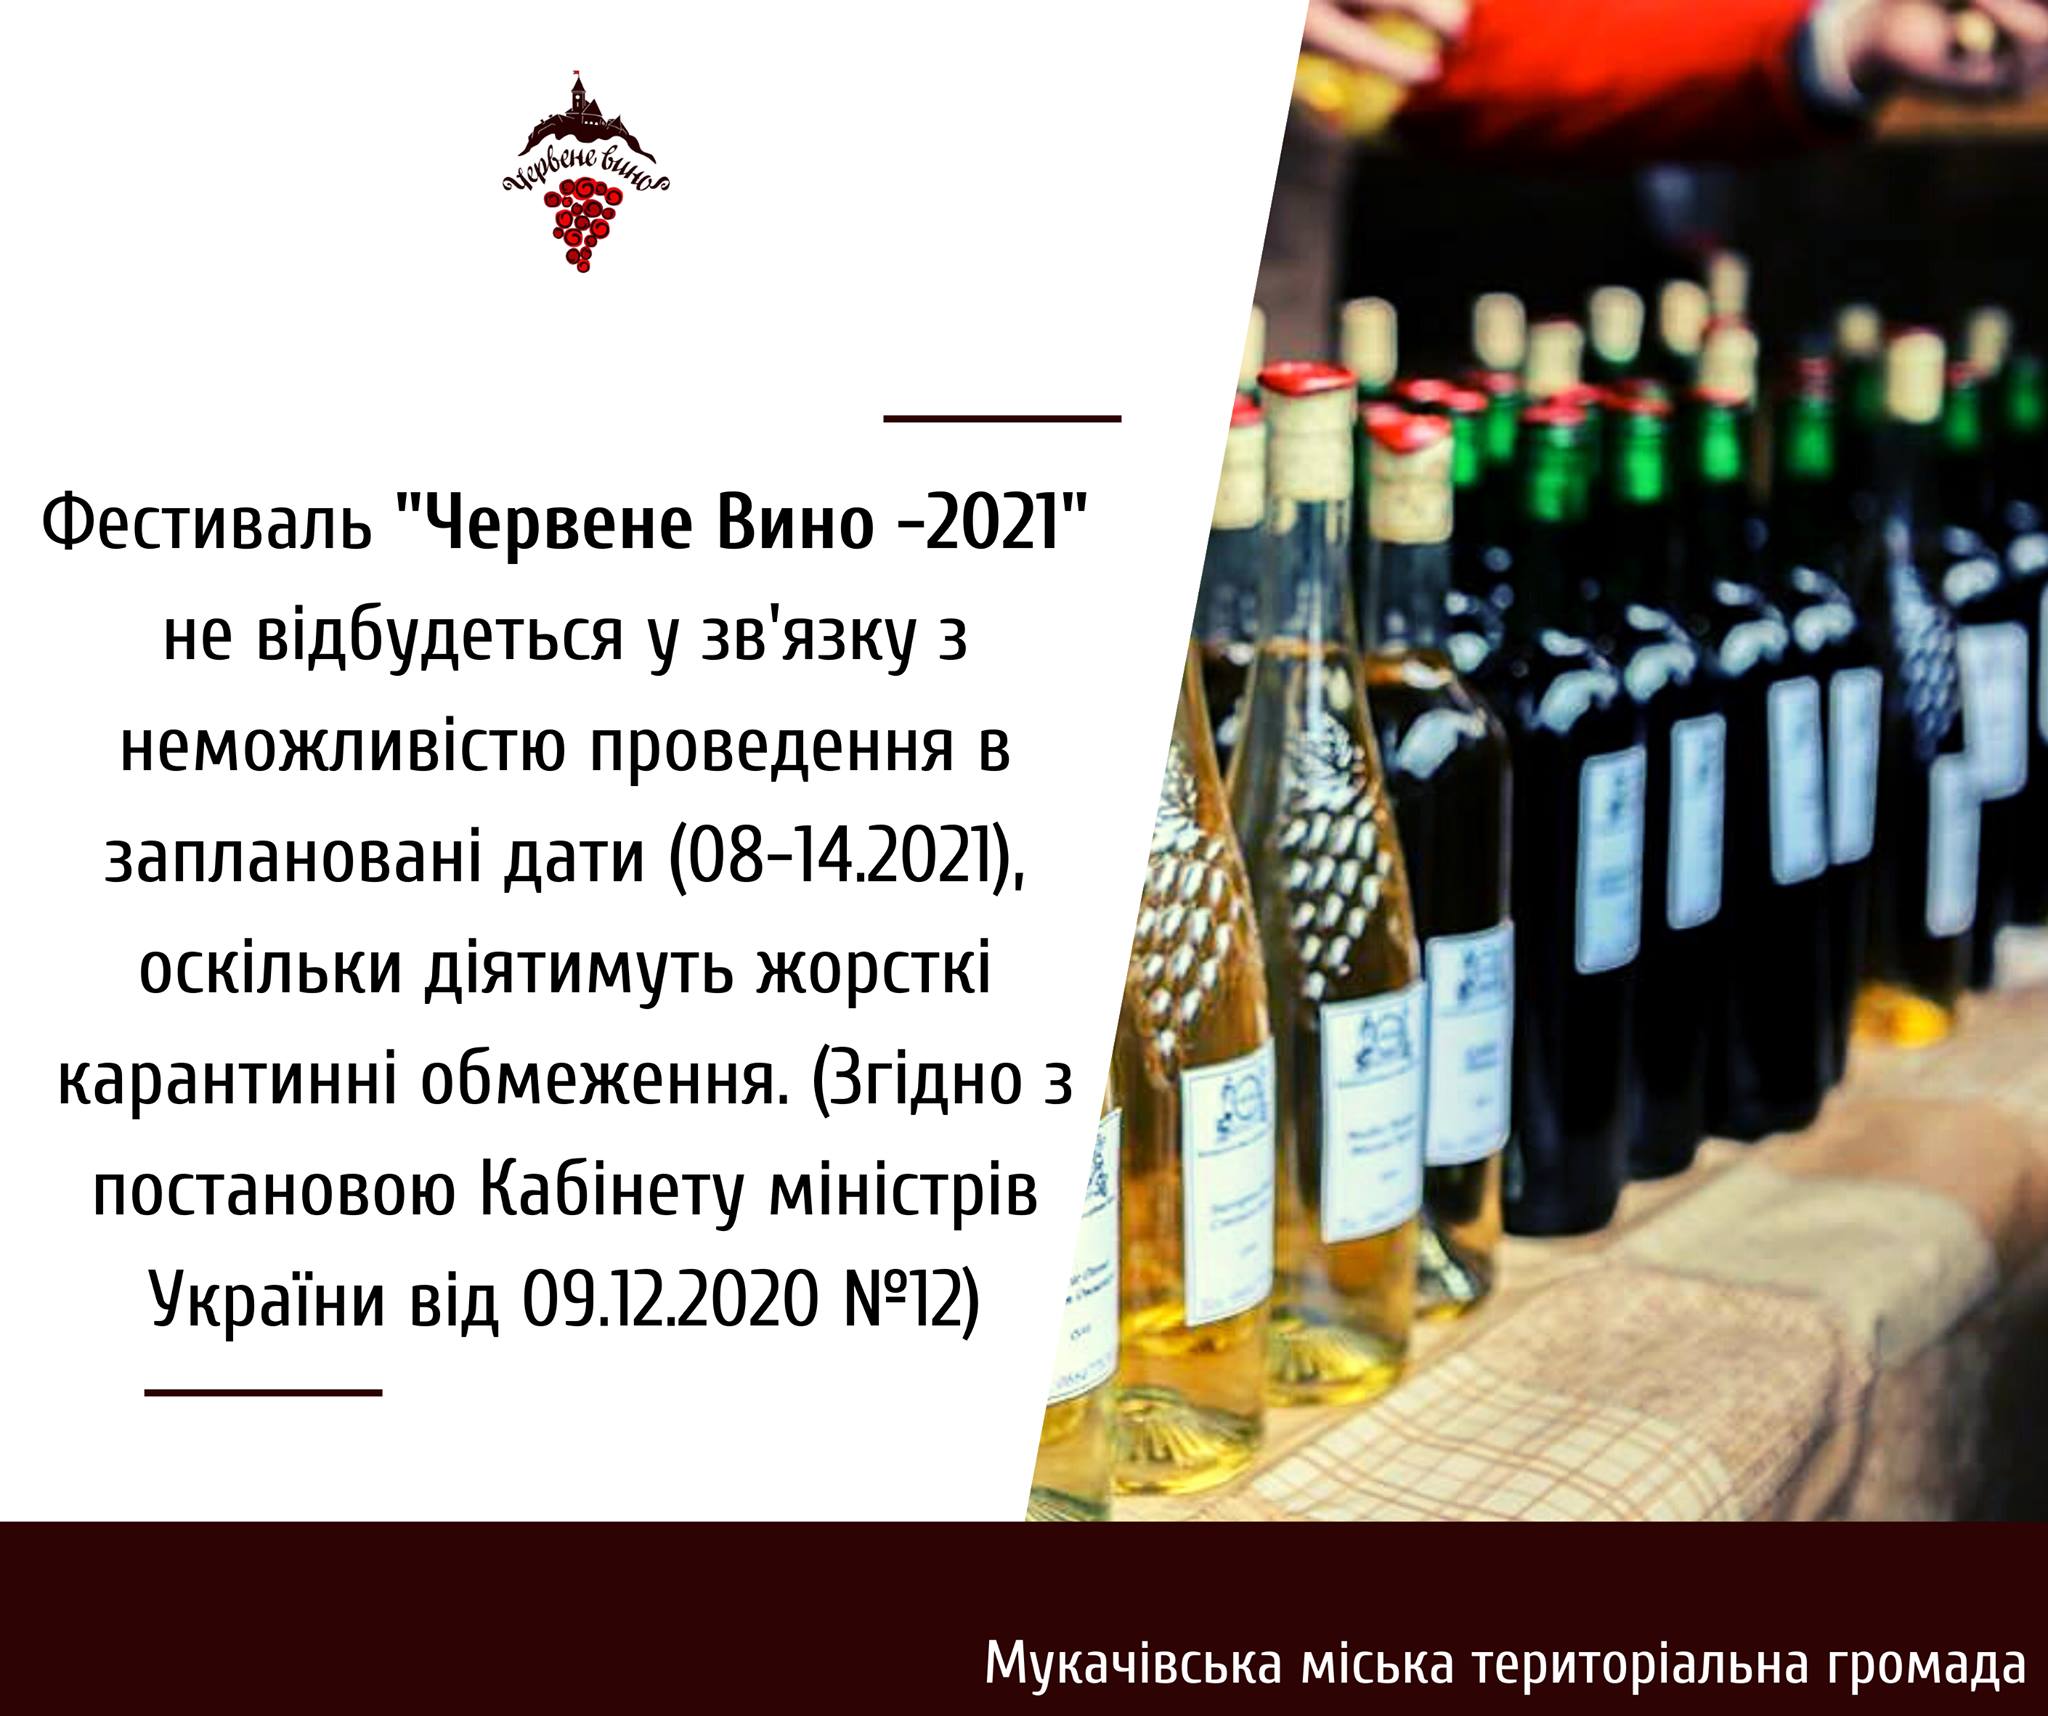 Фестиваль Червене вино 2021